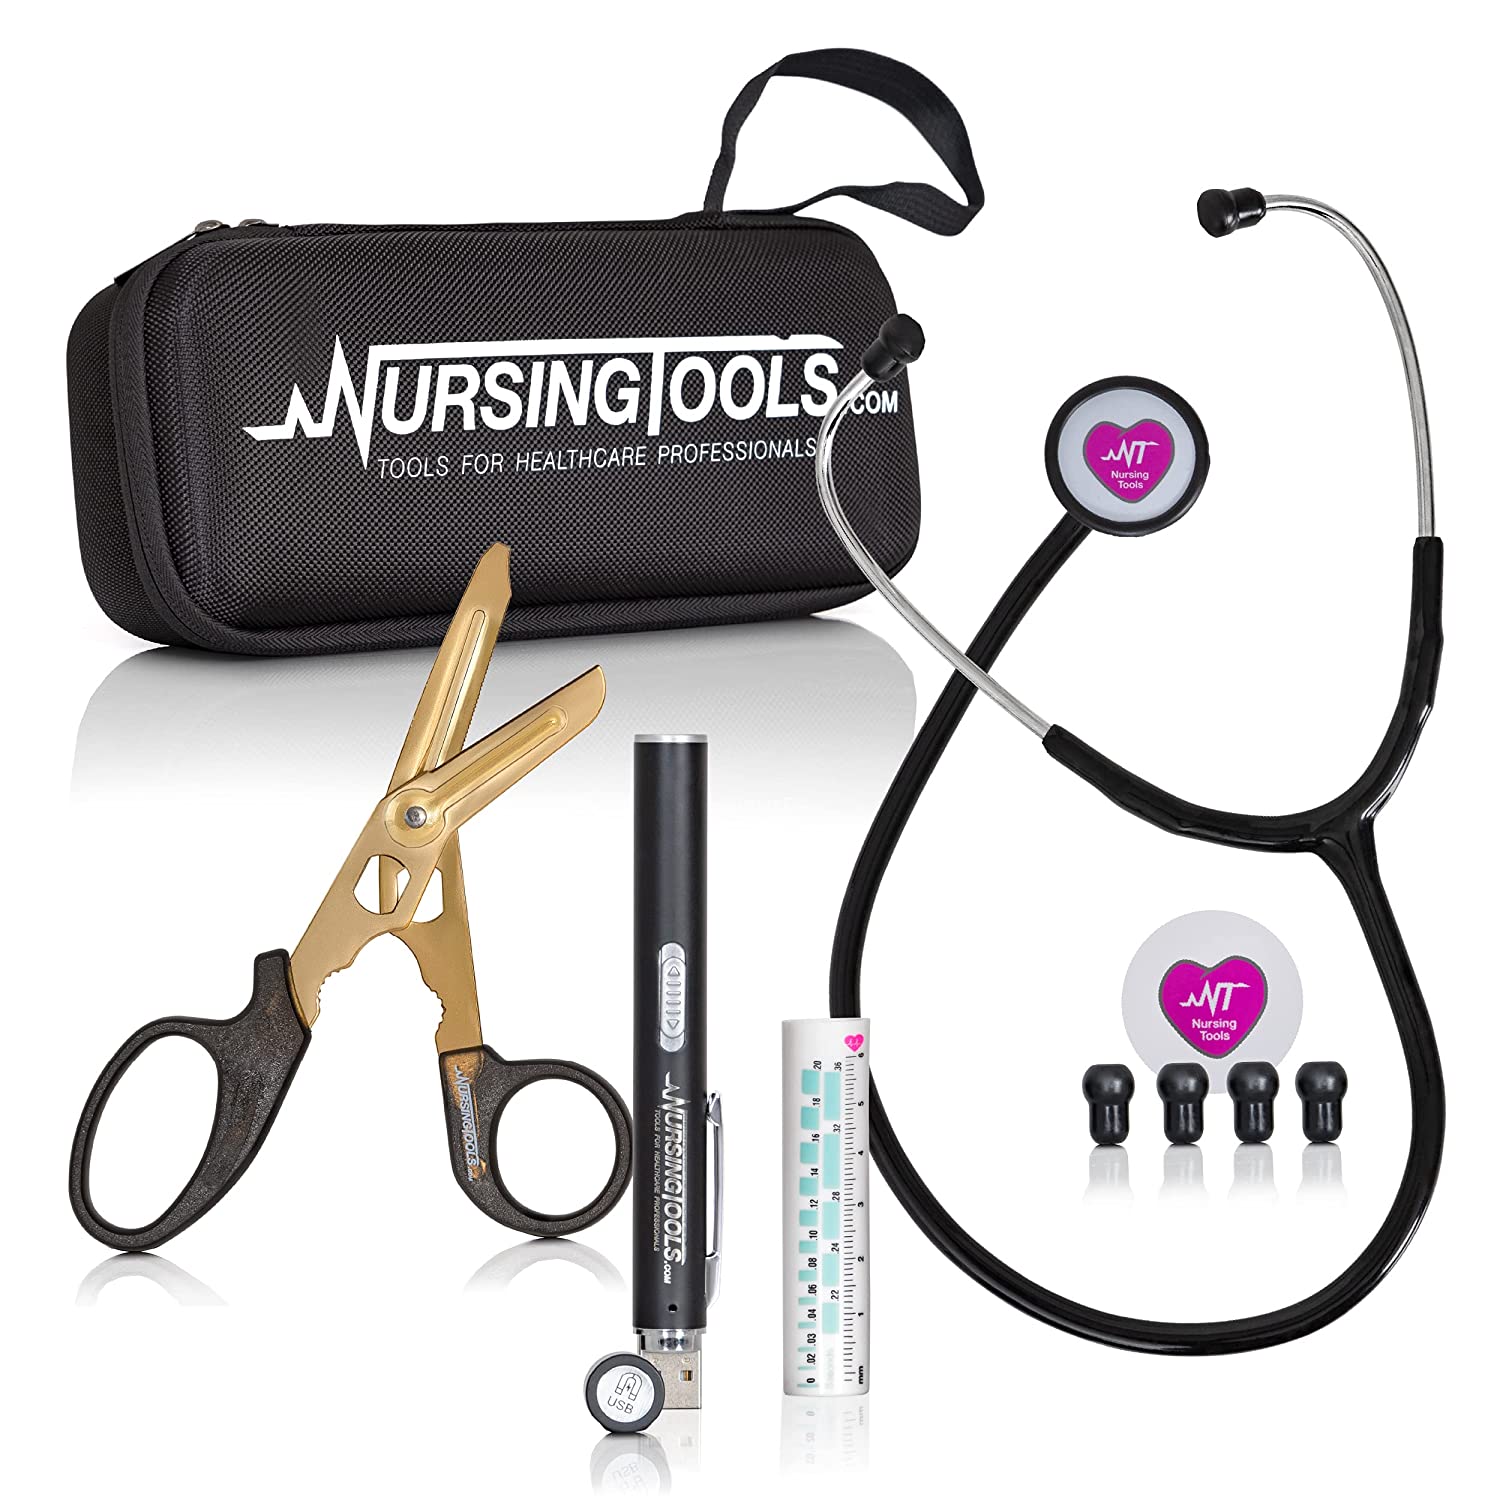 EMI Nursing Essentials Nurse Starter Kit - 10 Pieces Total